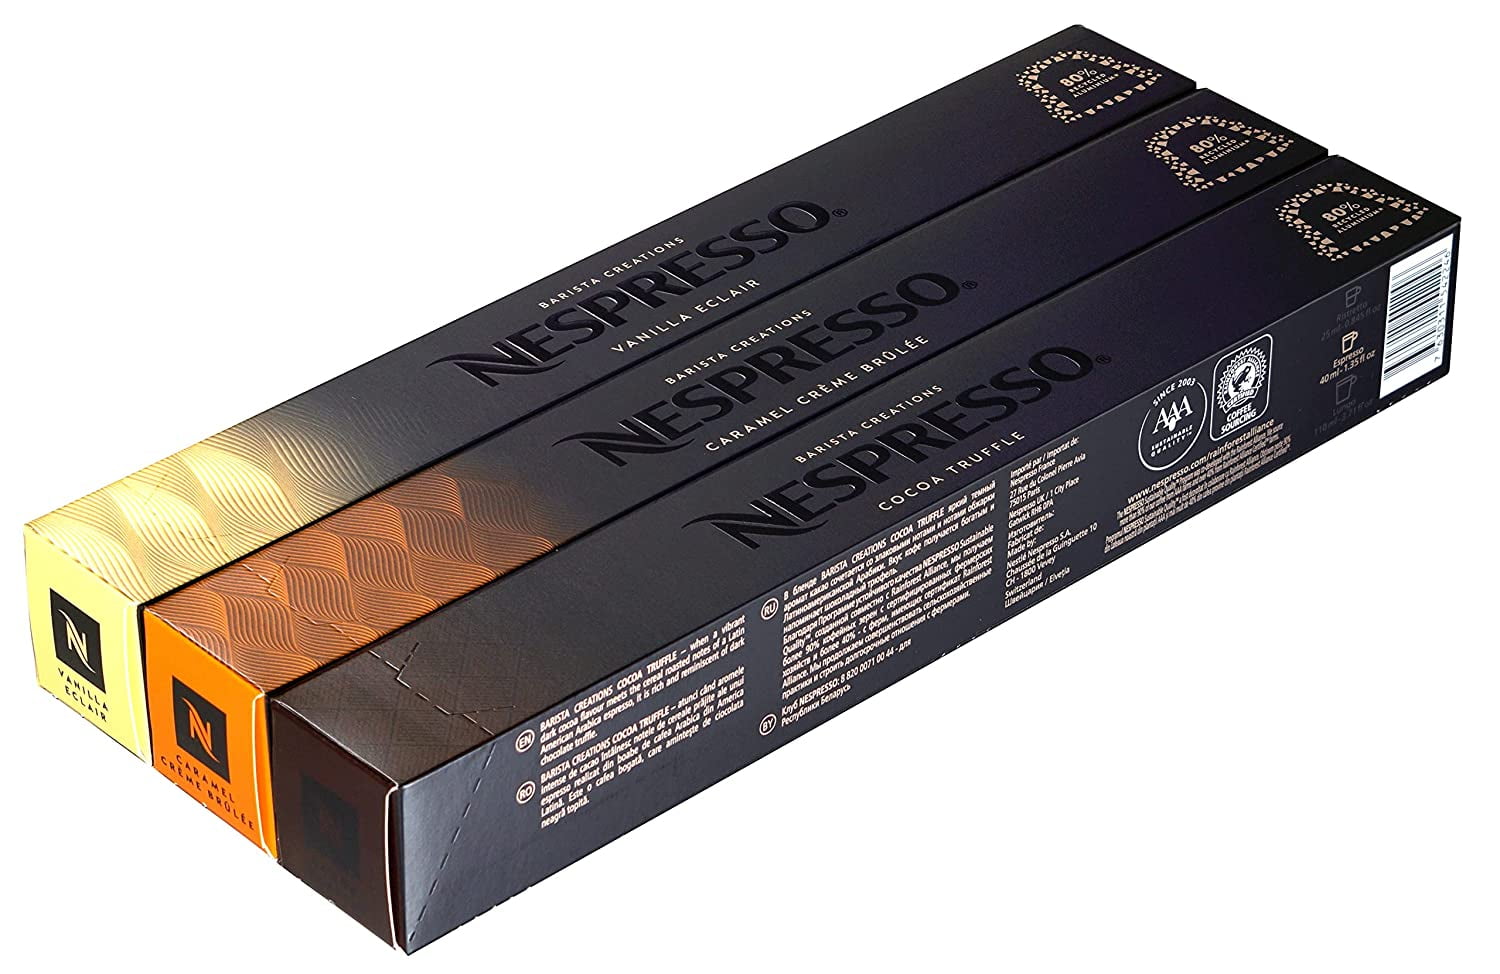 Nespresso Chocolate Fudge Flavor VertuoLine pods Algeria